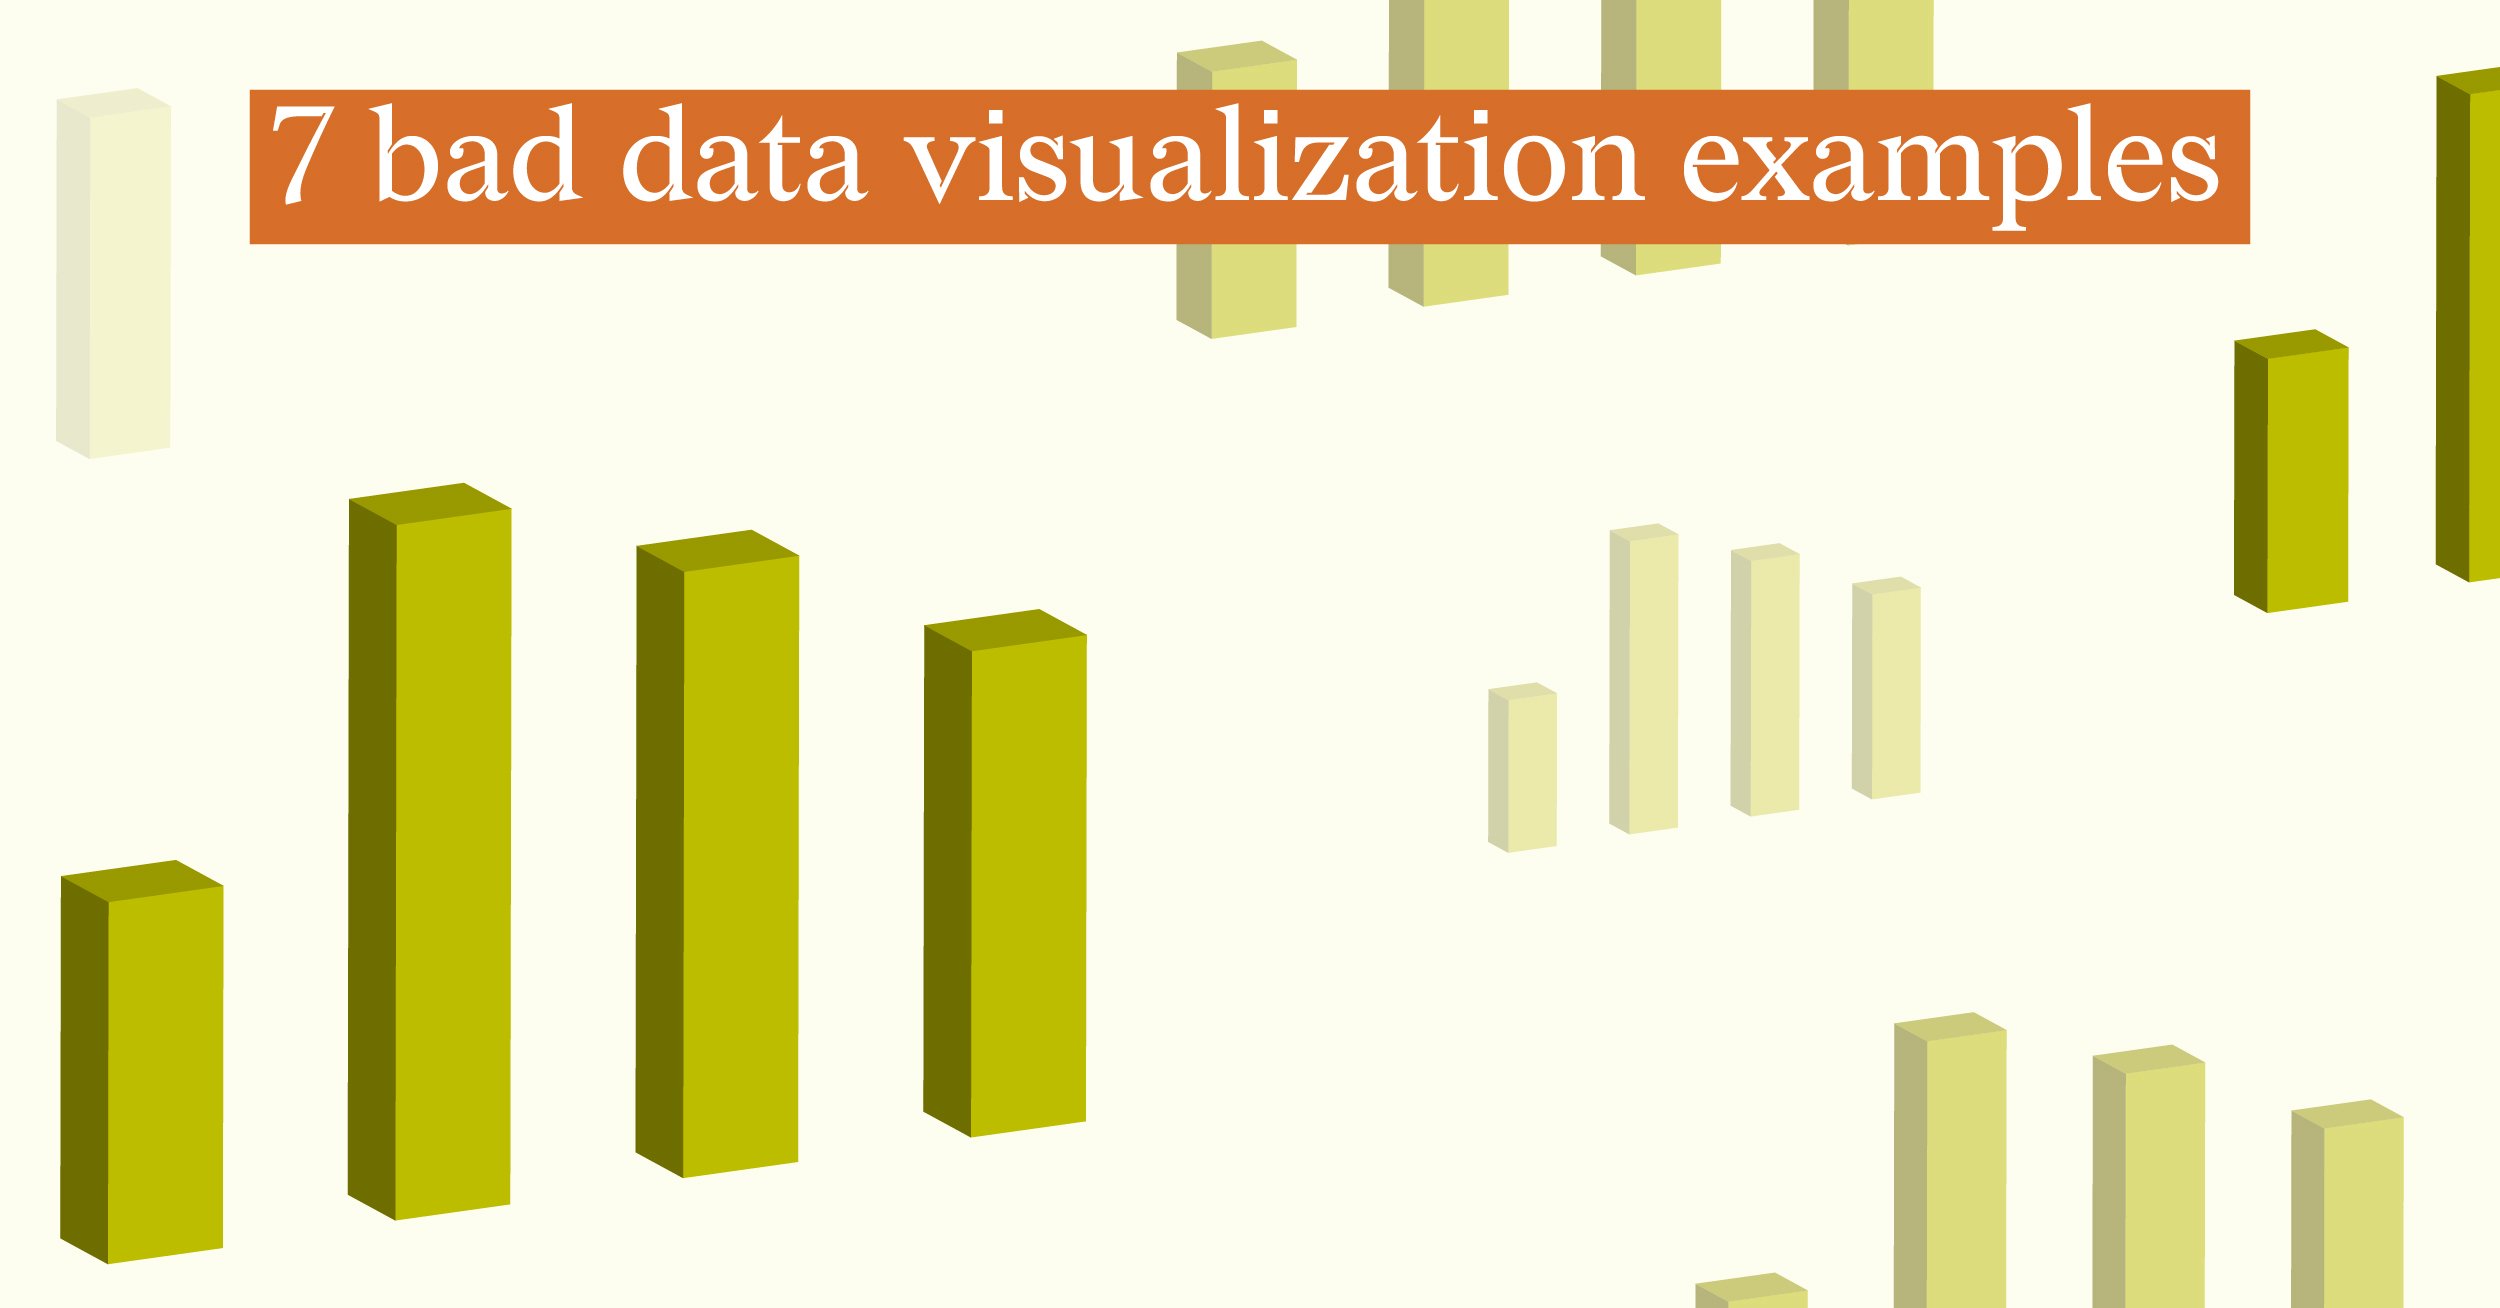 datylon-blog-7-bad-data-visualization-examples-featured-image-1